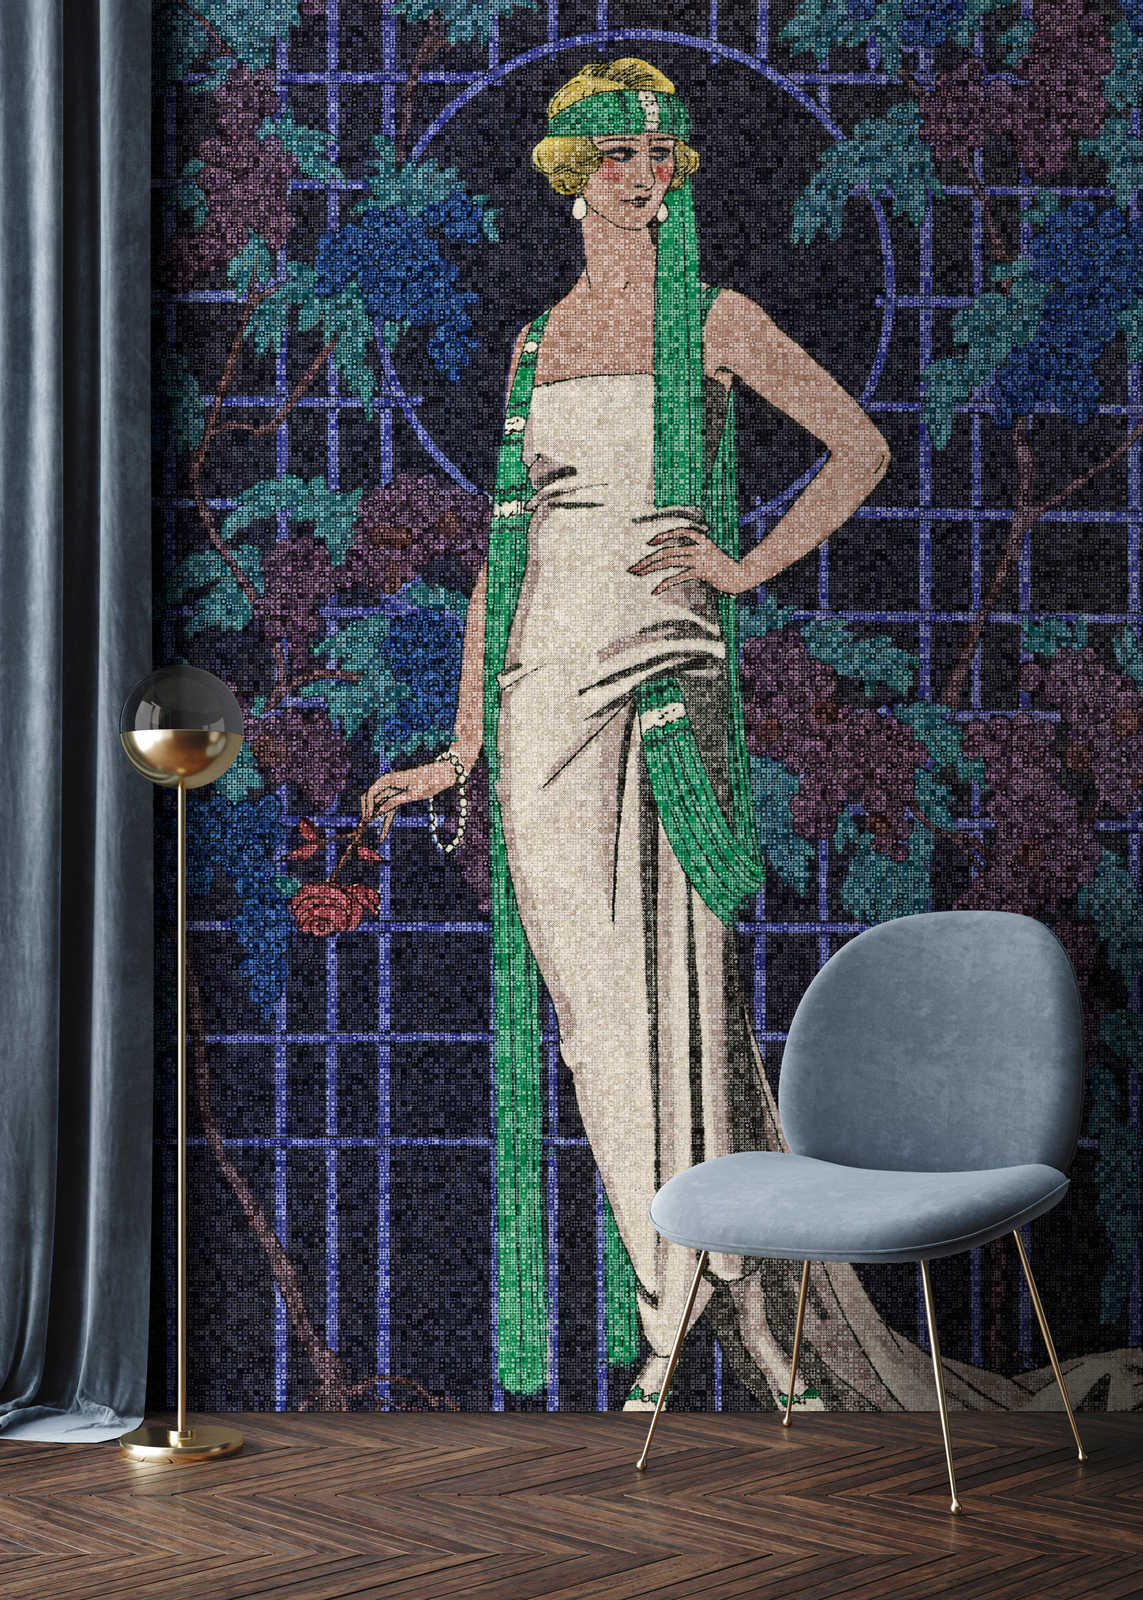             Scala 2 - Carta da parati a mosaico Art Deco Motivo donna stile anni '20
        